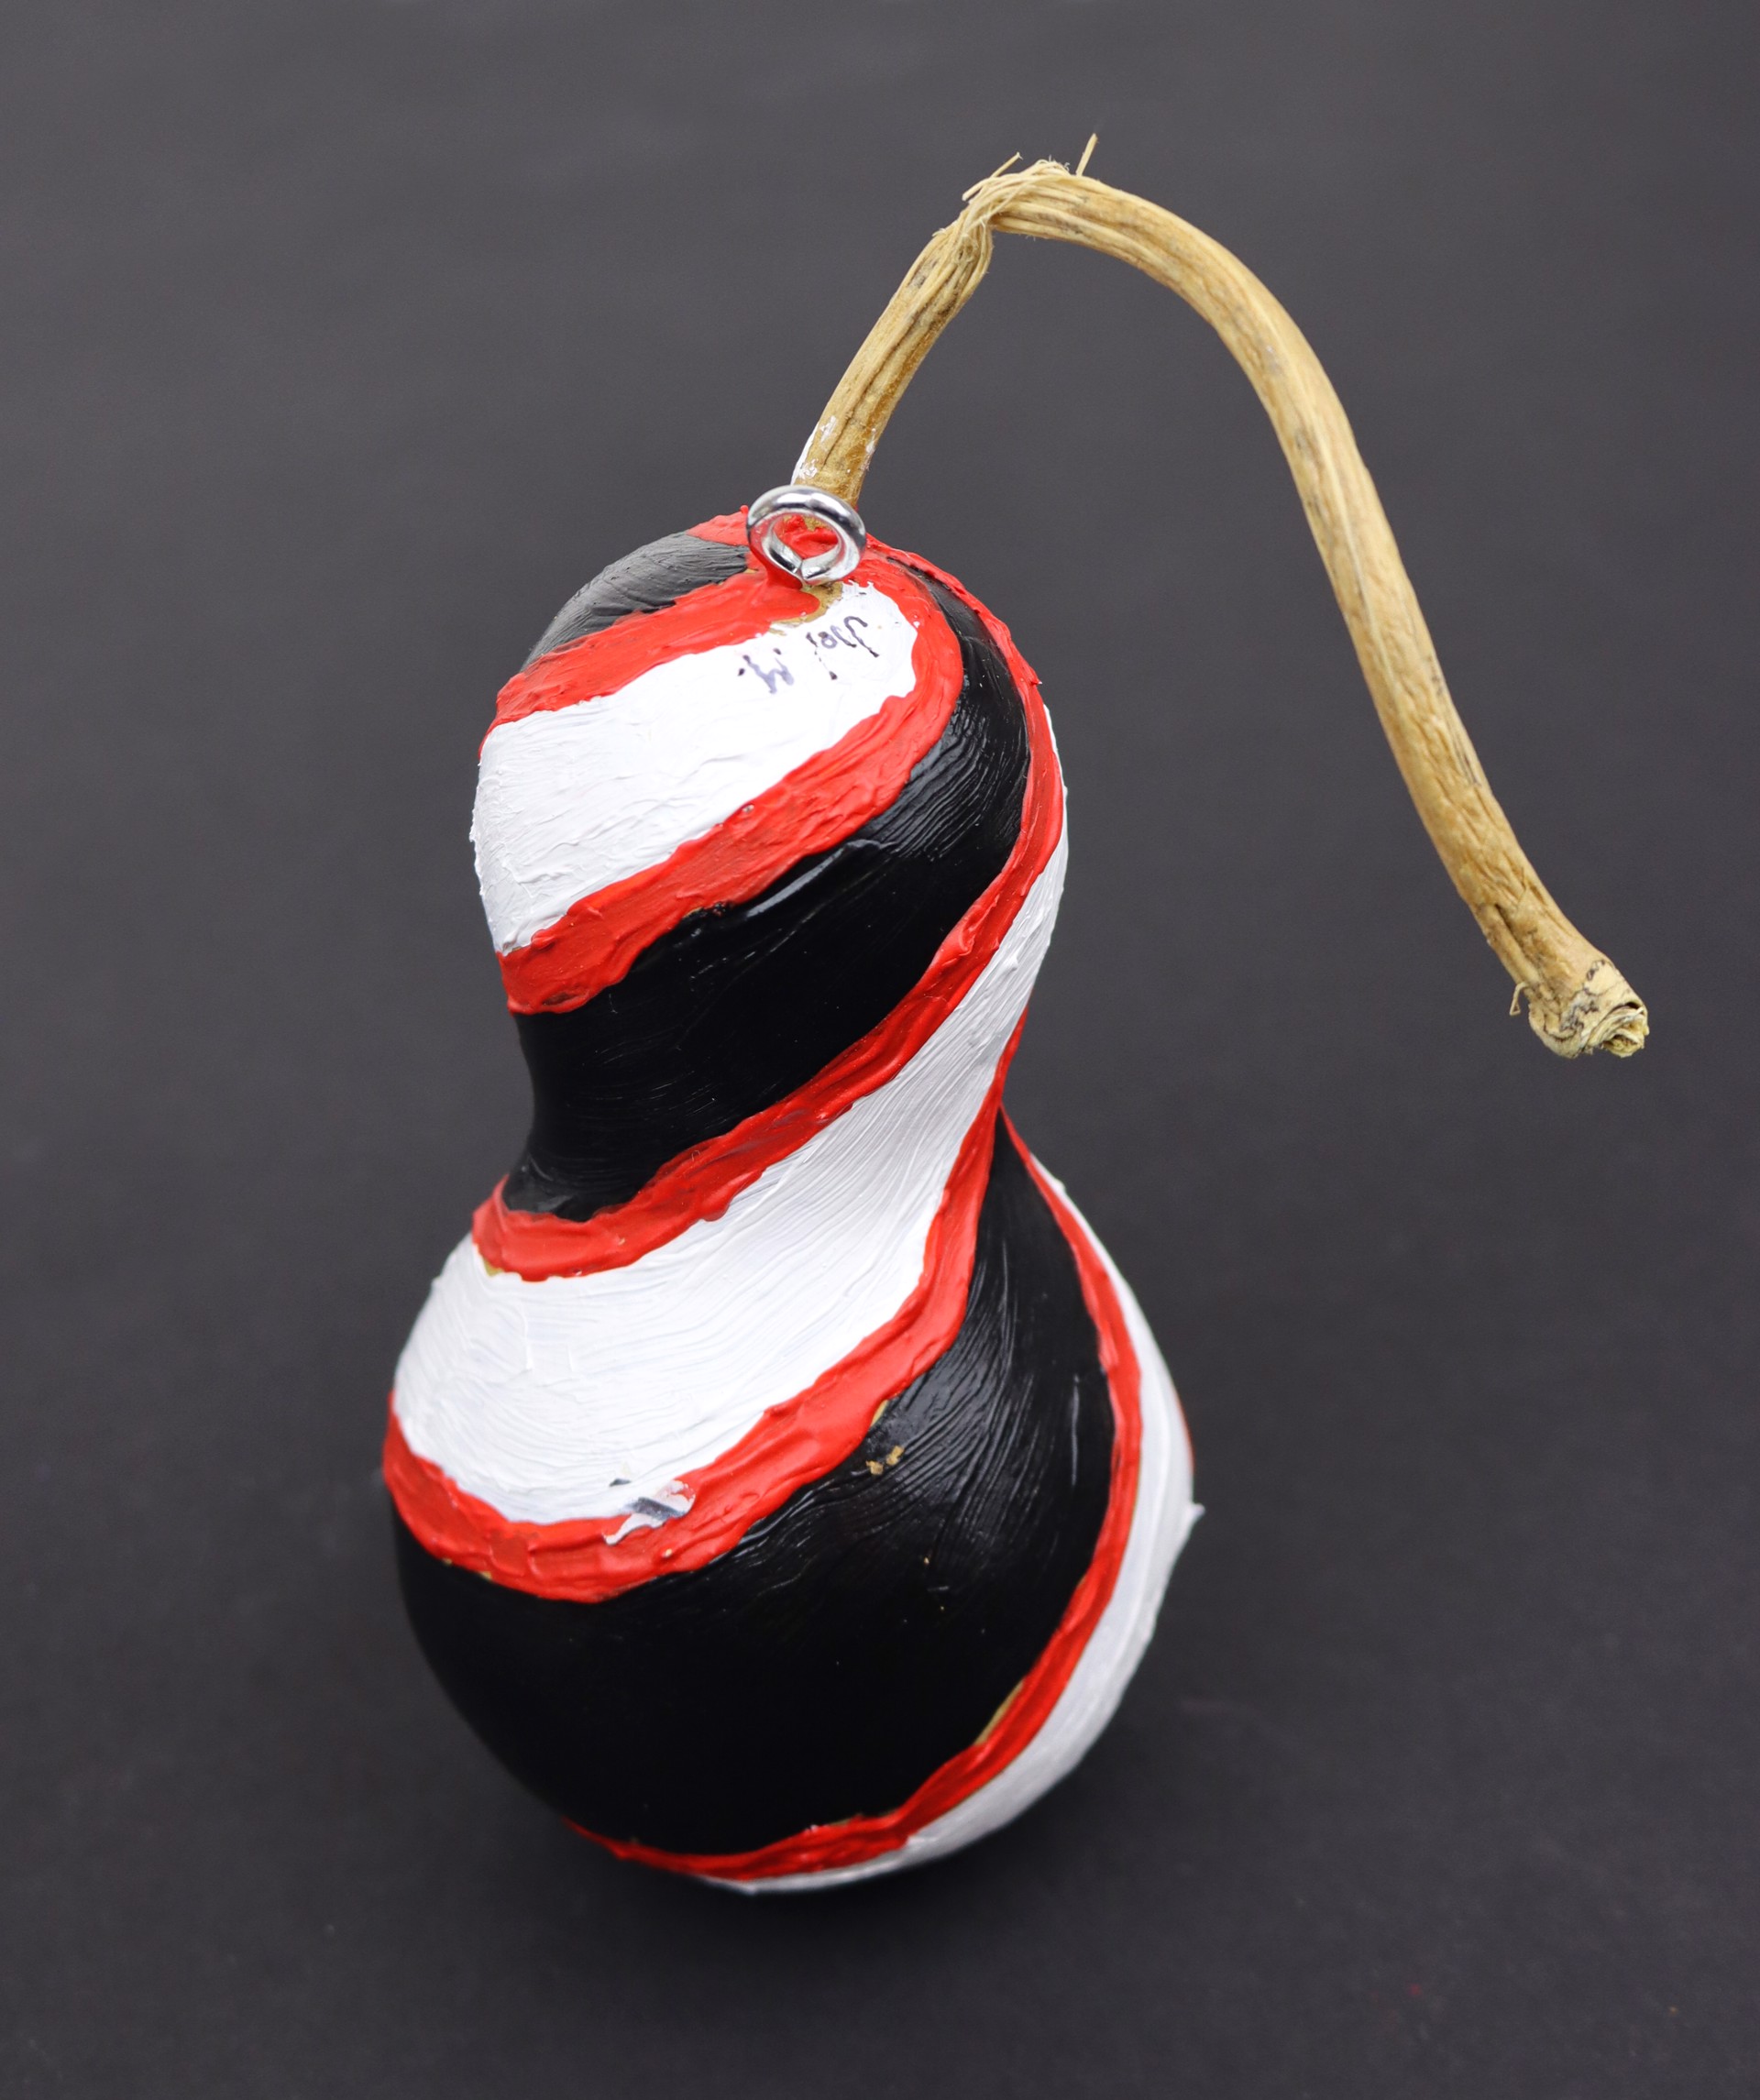 Candy Swirl (black, white, red) (gourd ornament) by Joel Martinez